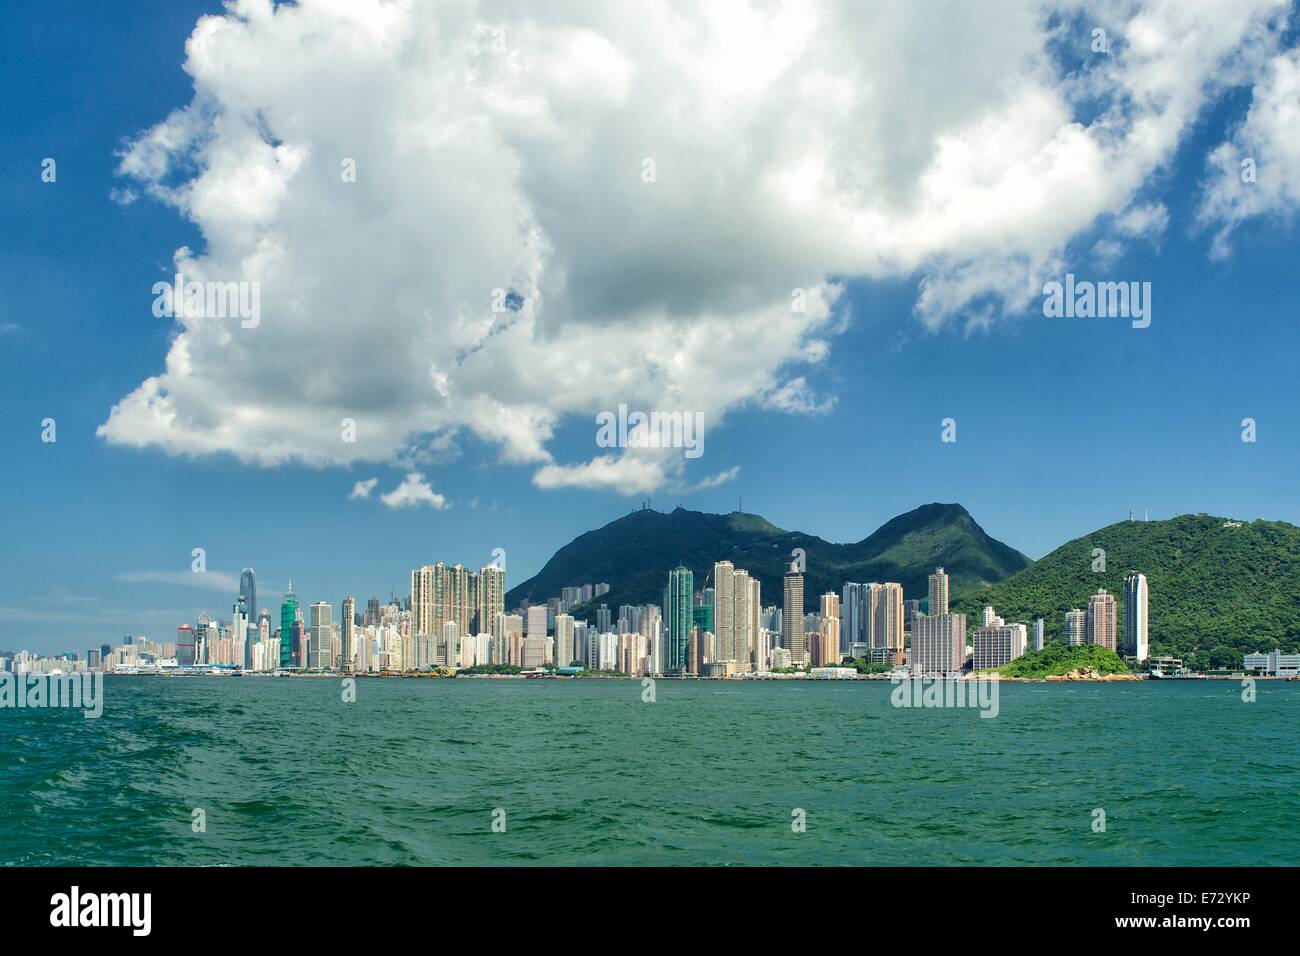 L'île de Hong Kong skyline vue de la mer Banque D'Images